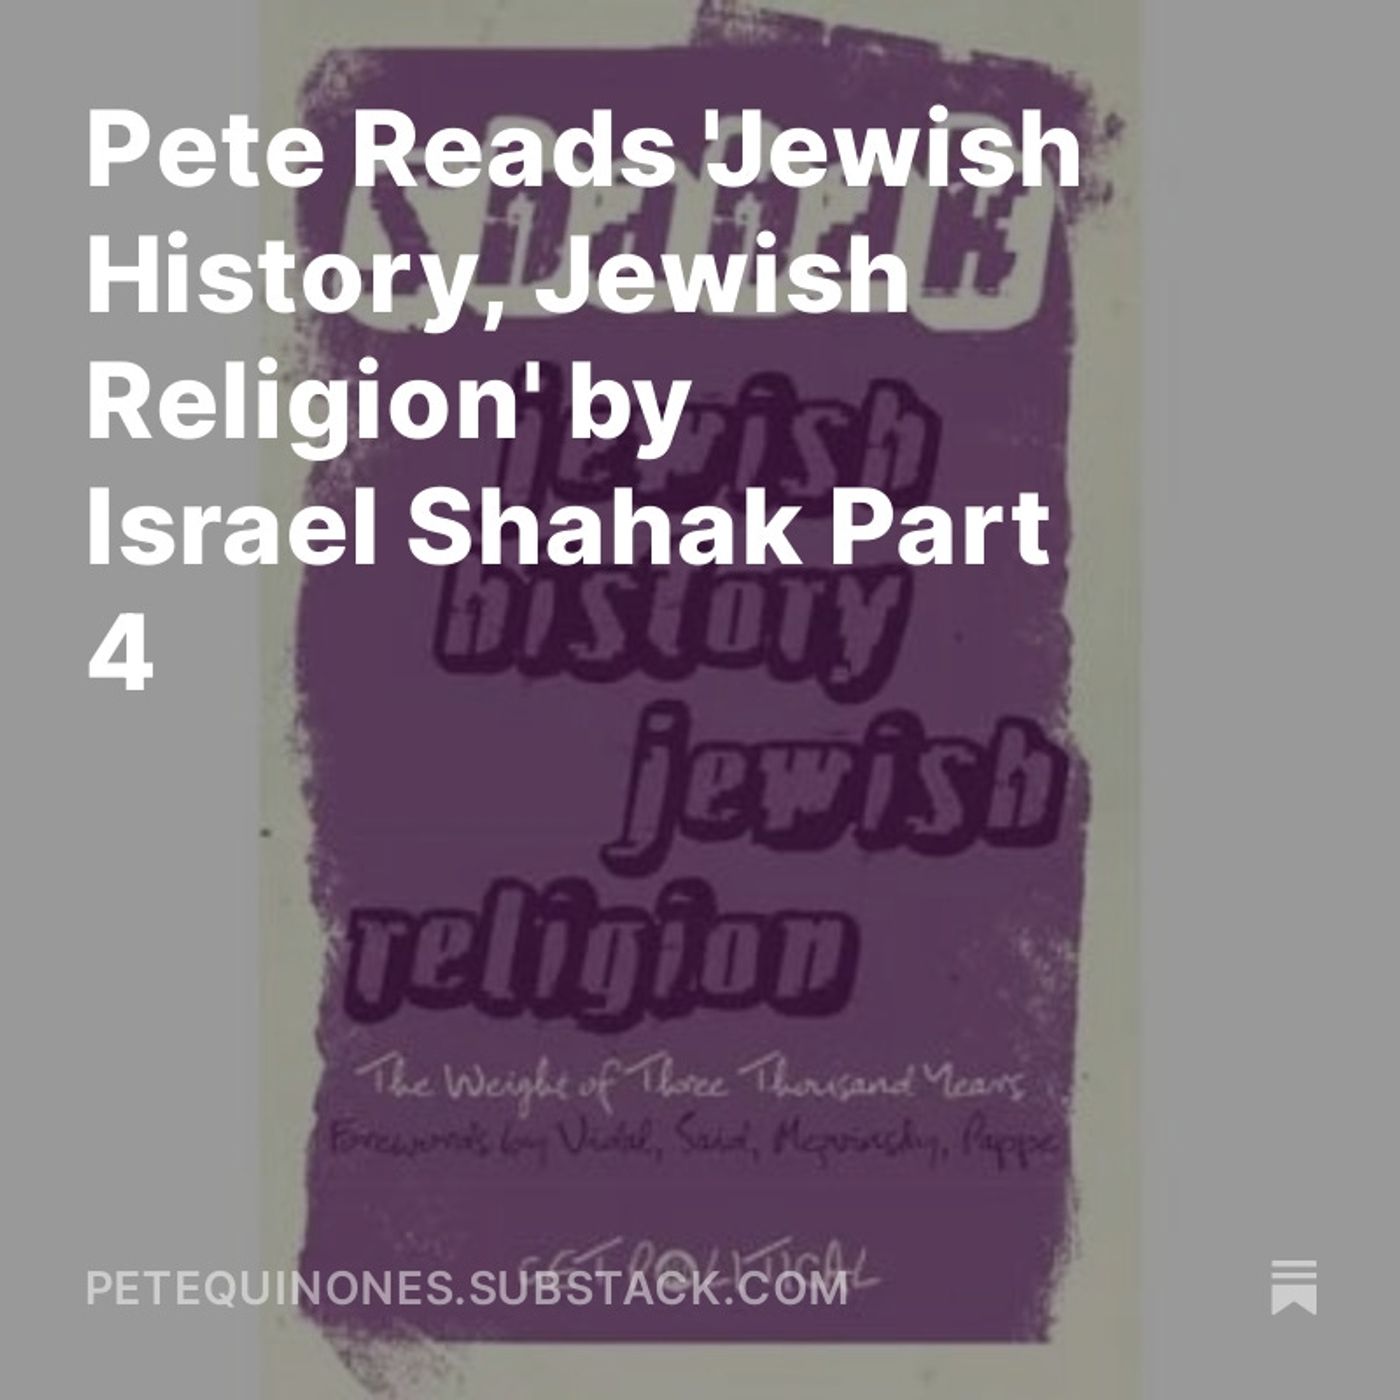 Pete Reads 'Jewish History, Jewish Religion' by Israel Shahak Part 4